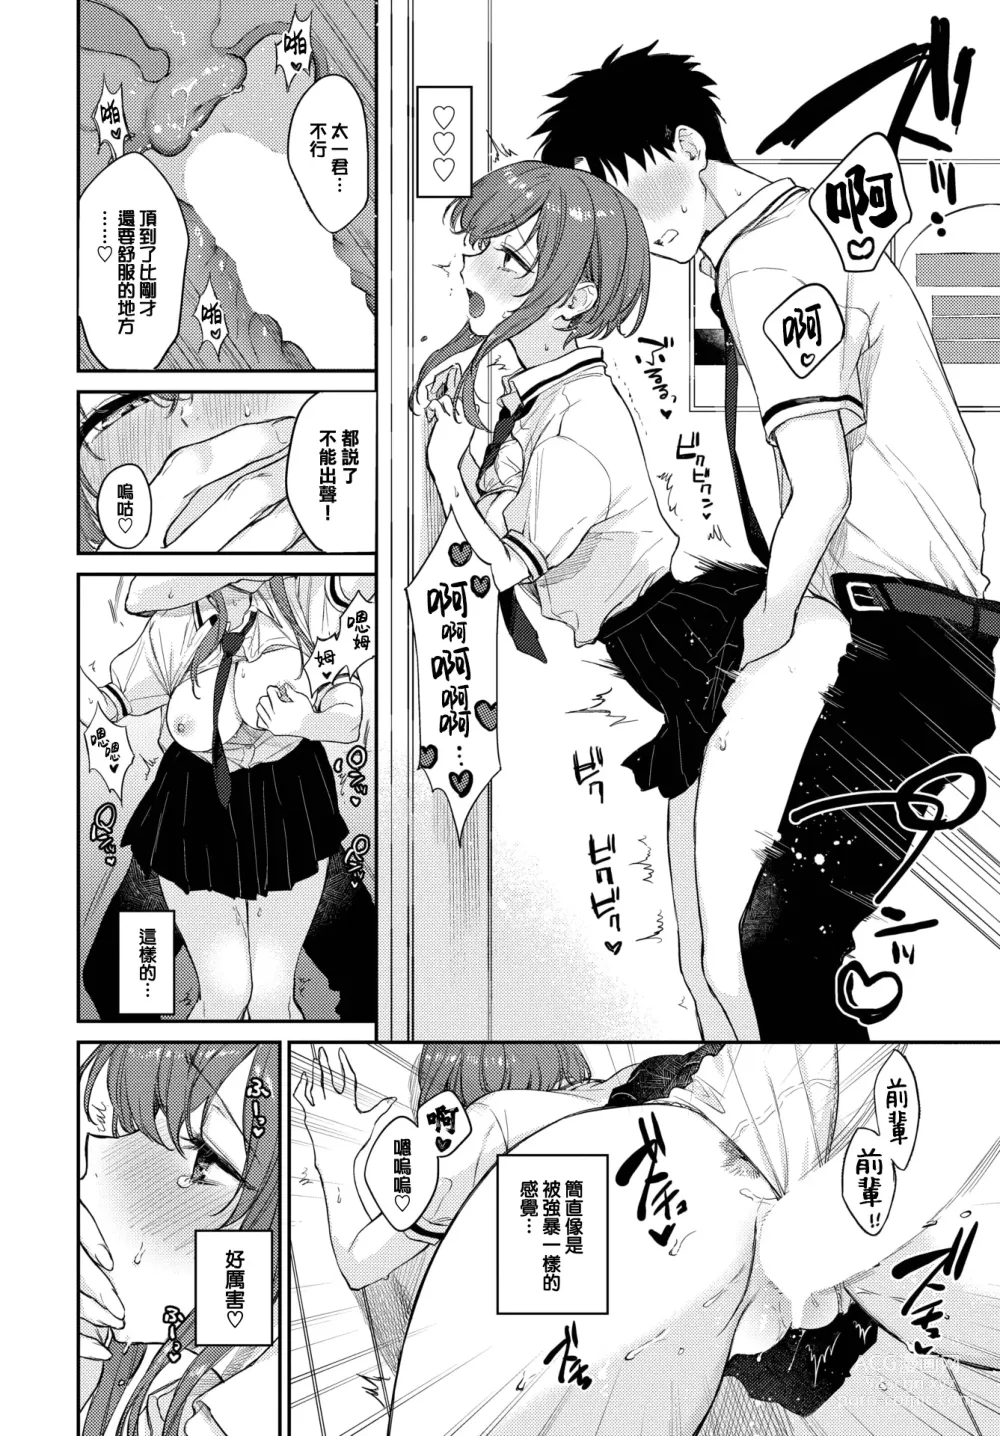 Page 9 of manga Come Pain!2